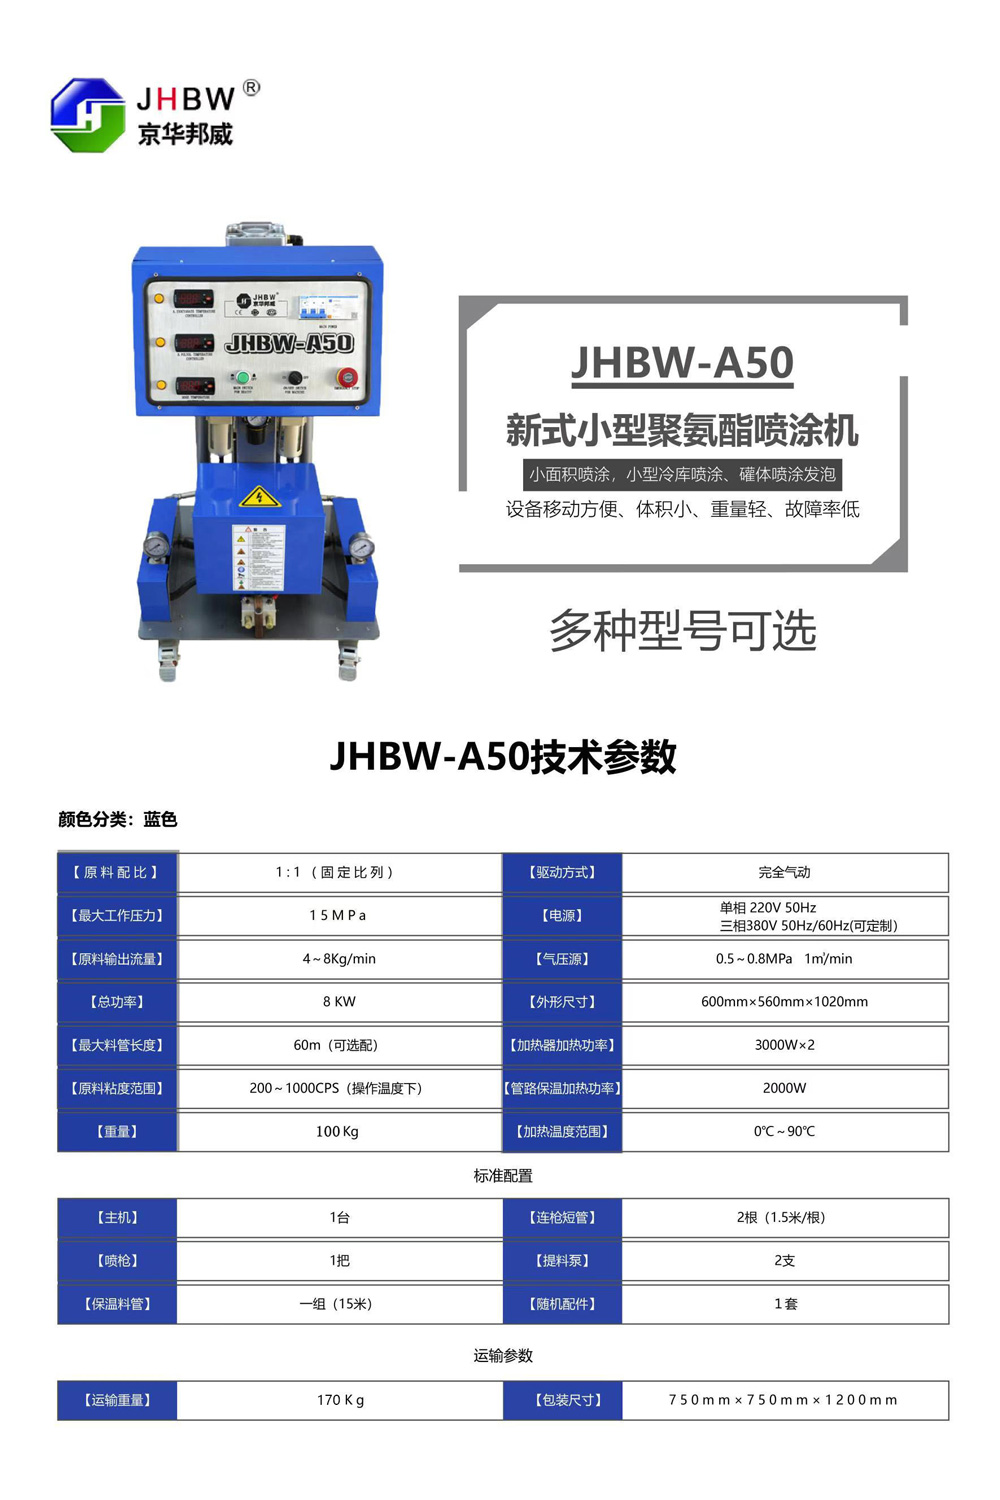 JHBW-A50聚氨酯喷涂机